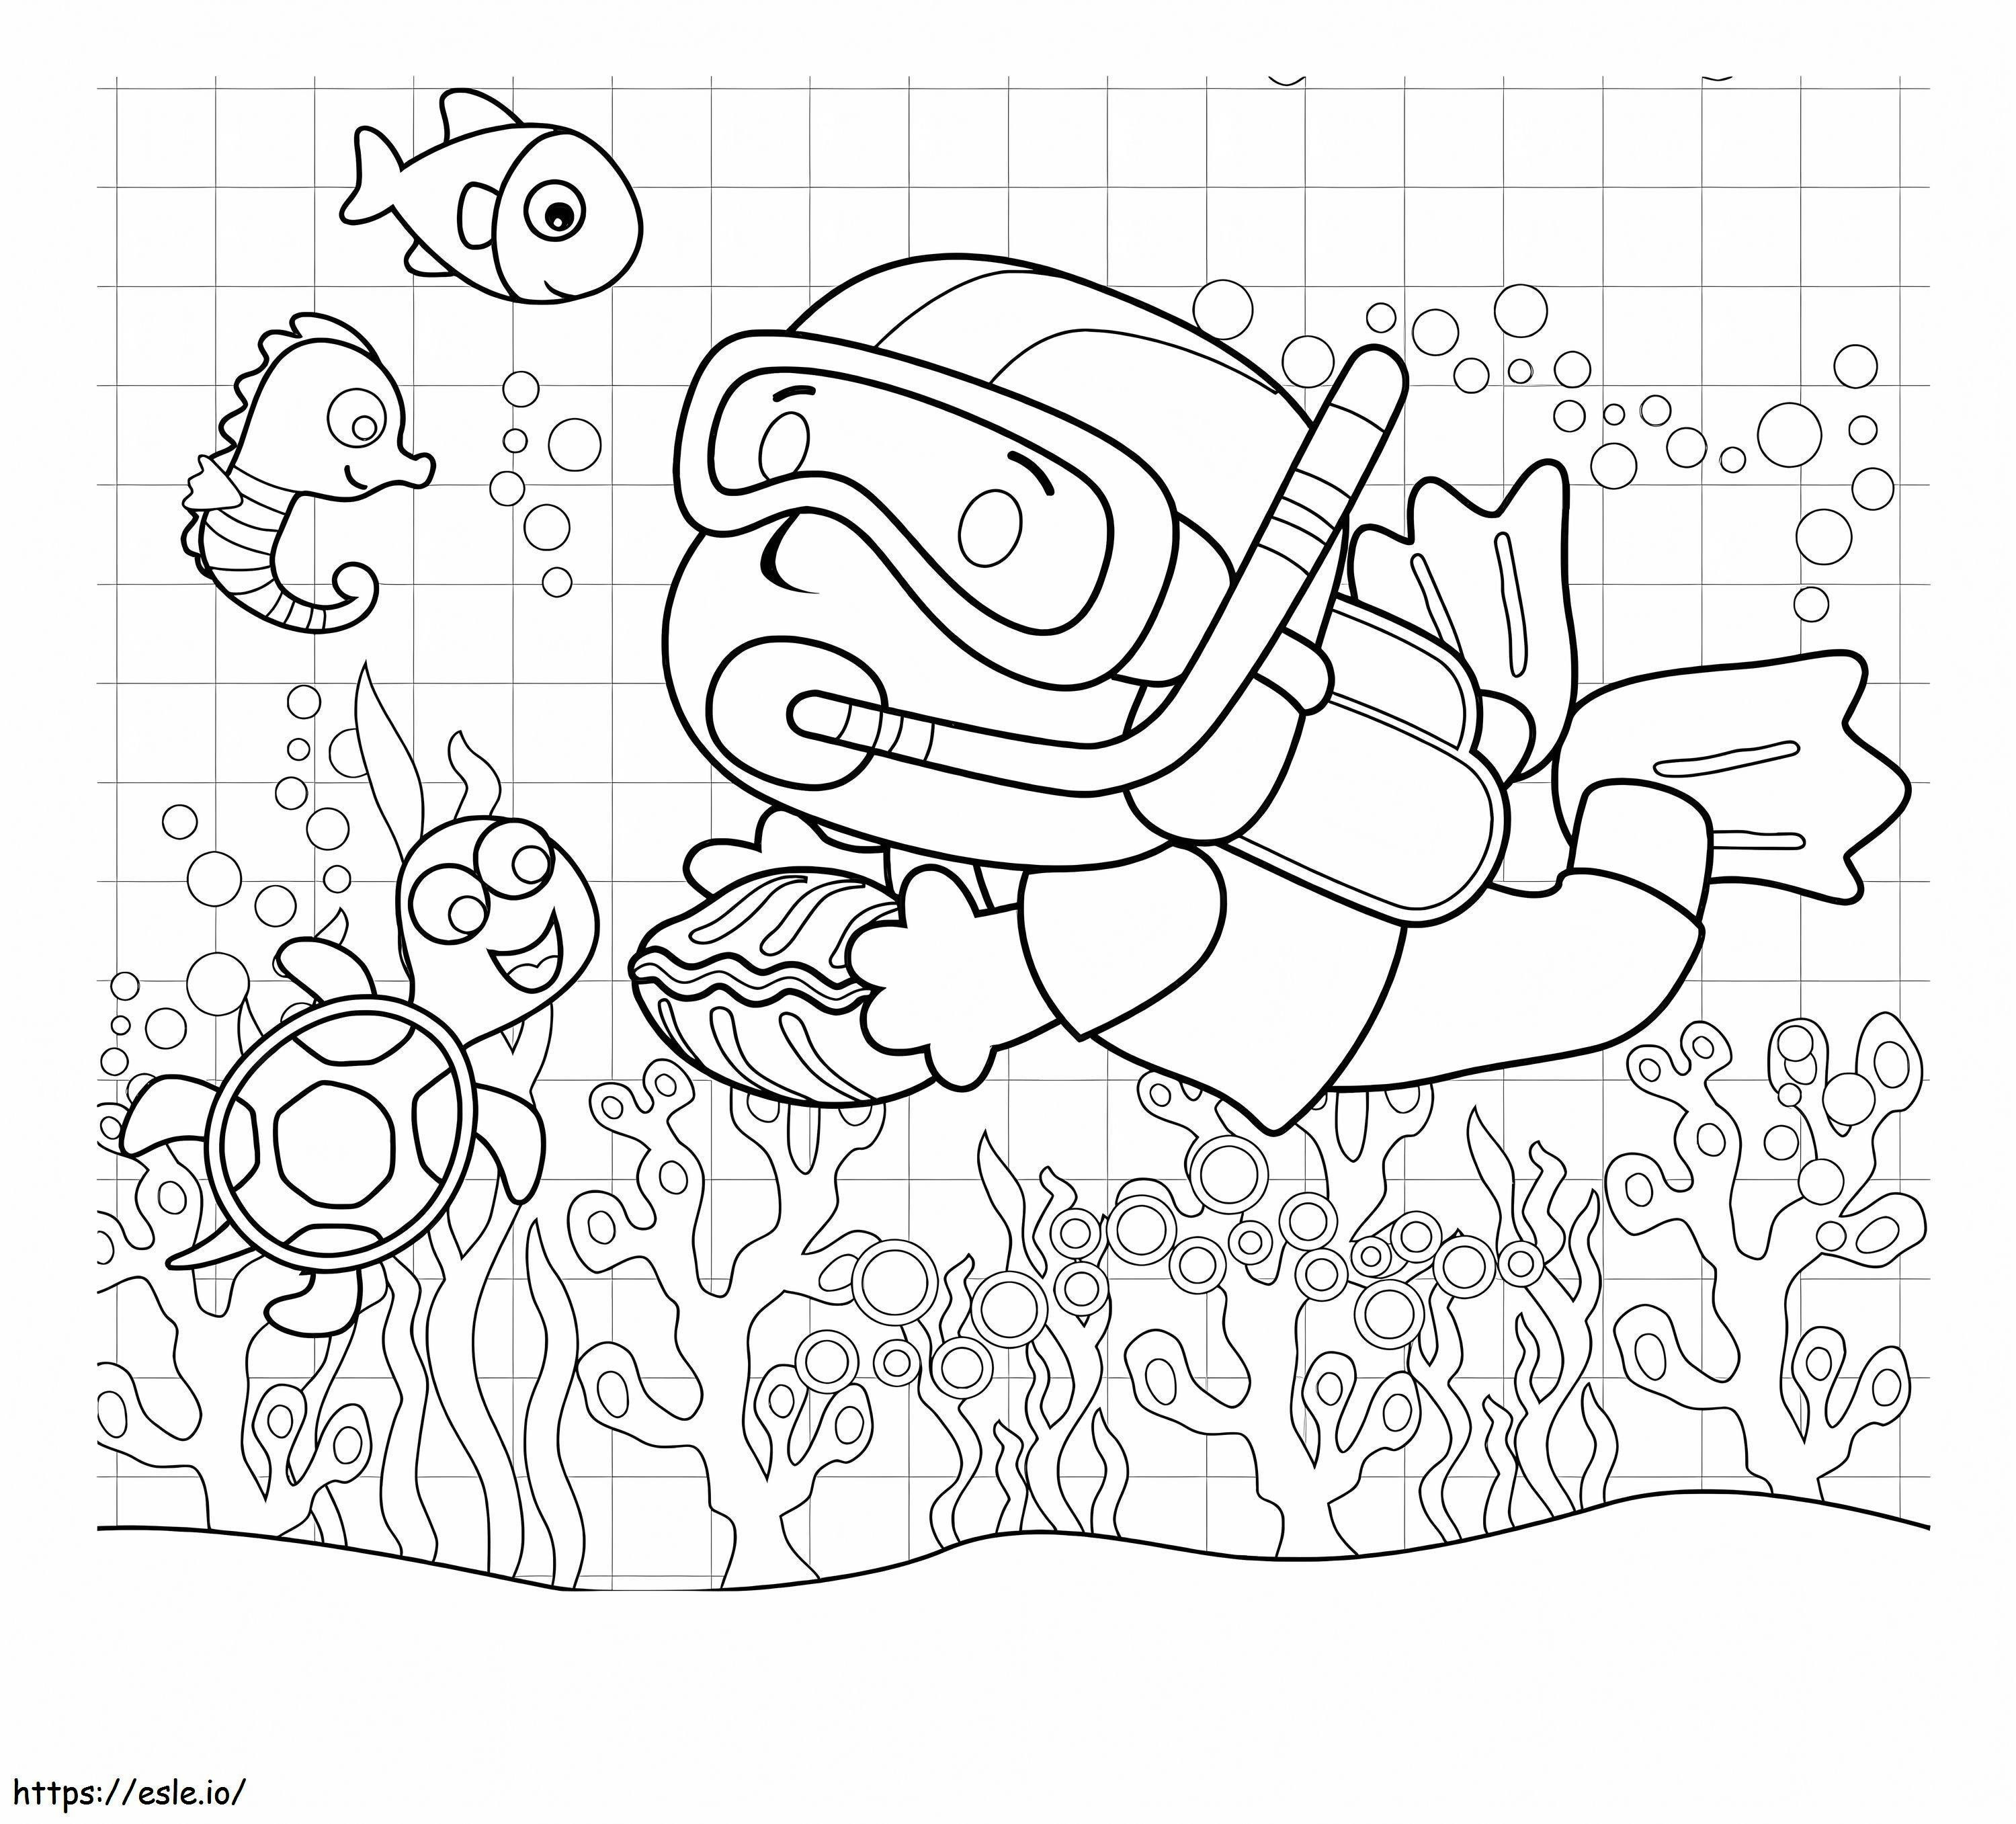 Little Diver coloring page